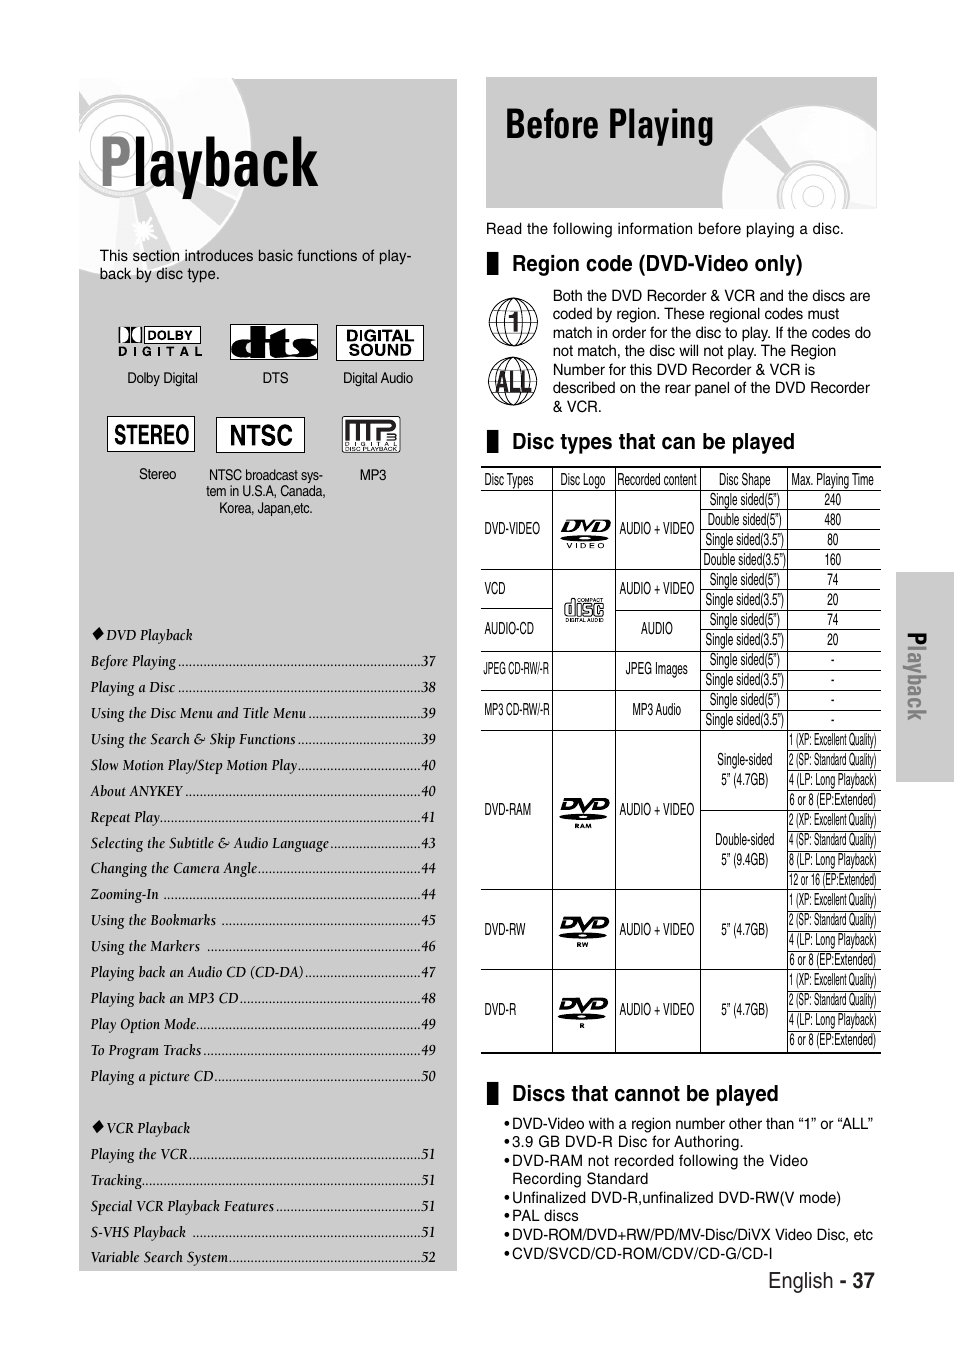 Playback, Before playing, English - 37 | Samsung DVD-VR325-XAC User Manual  | Page 37 / 89 | Original mode